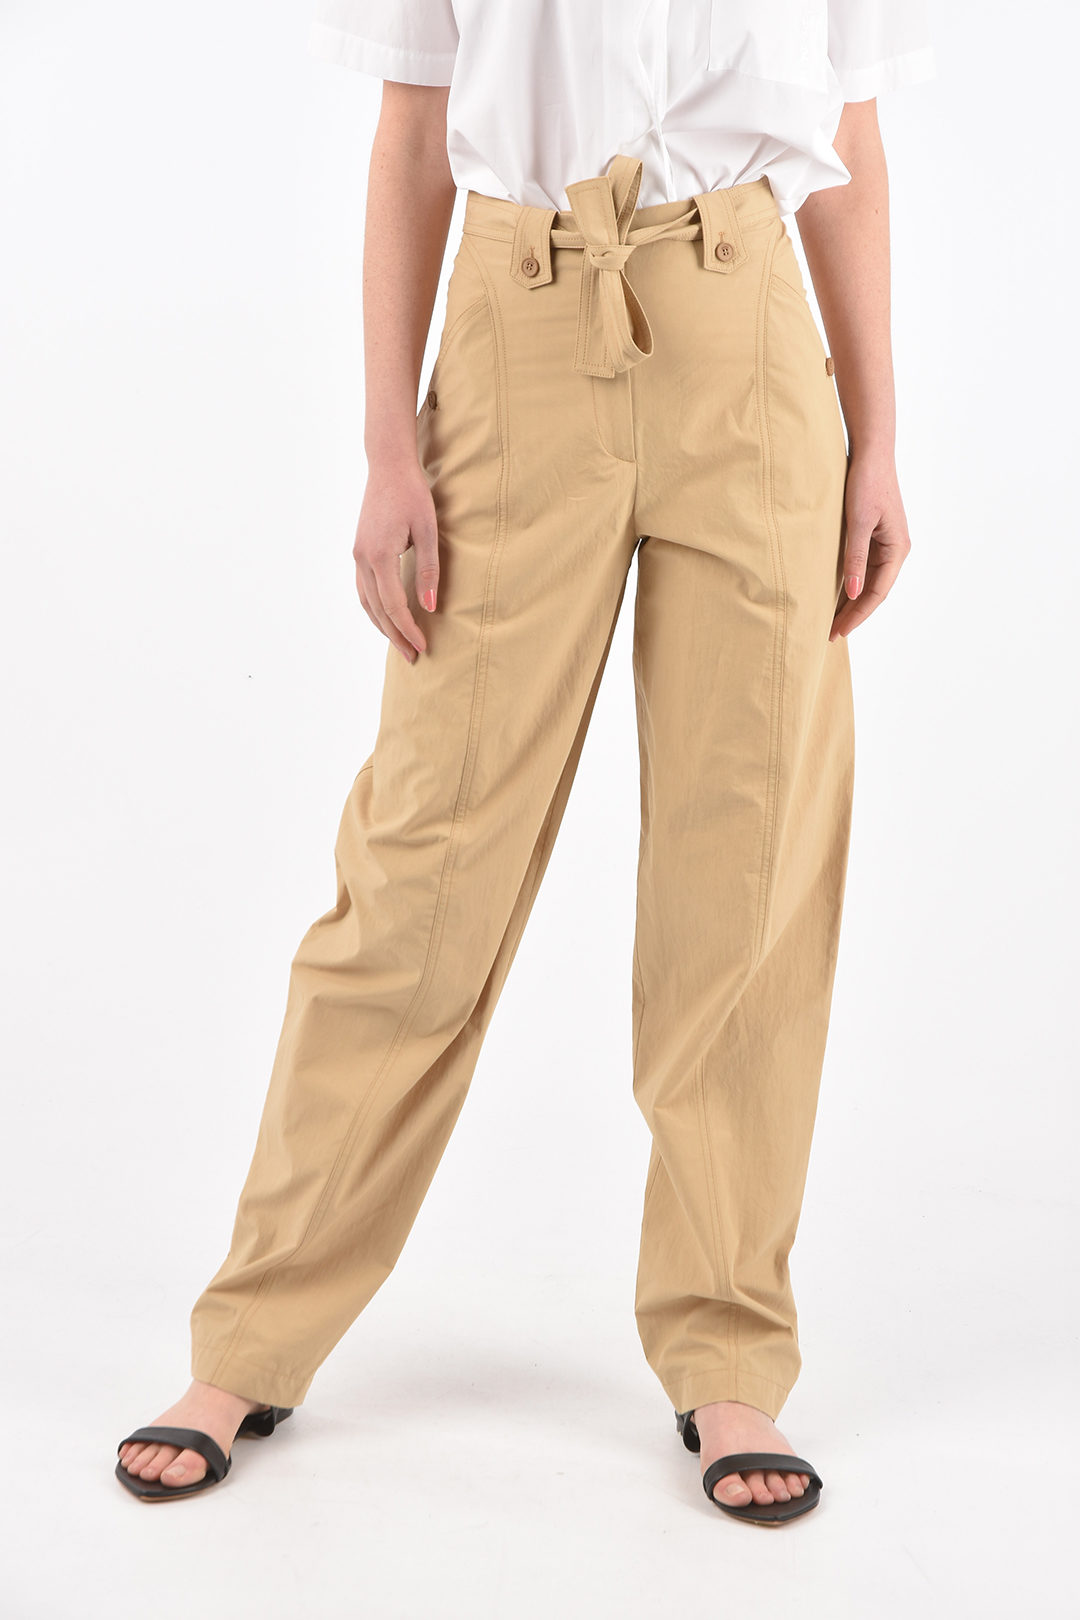 JDEFEG Tan Dress Pants for Women Business Casual Ladies Workplace Trousers  Casual Versatile Straight Pants Temperament Elegant Pocket Belt Pants Size